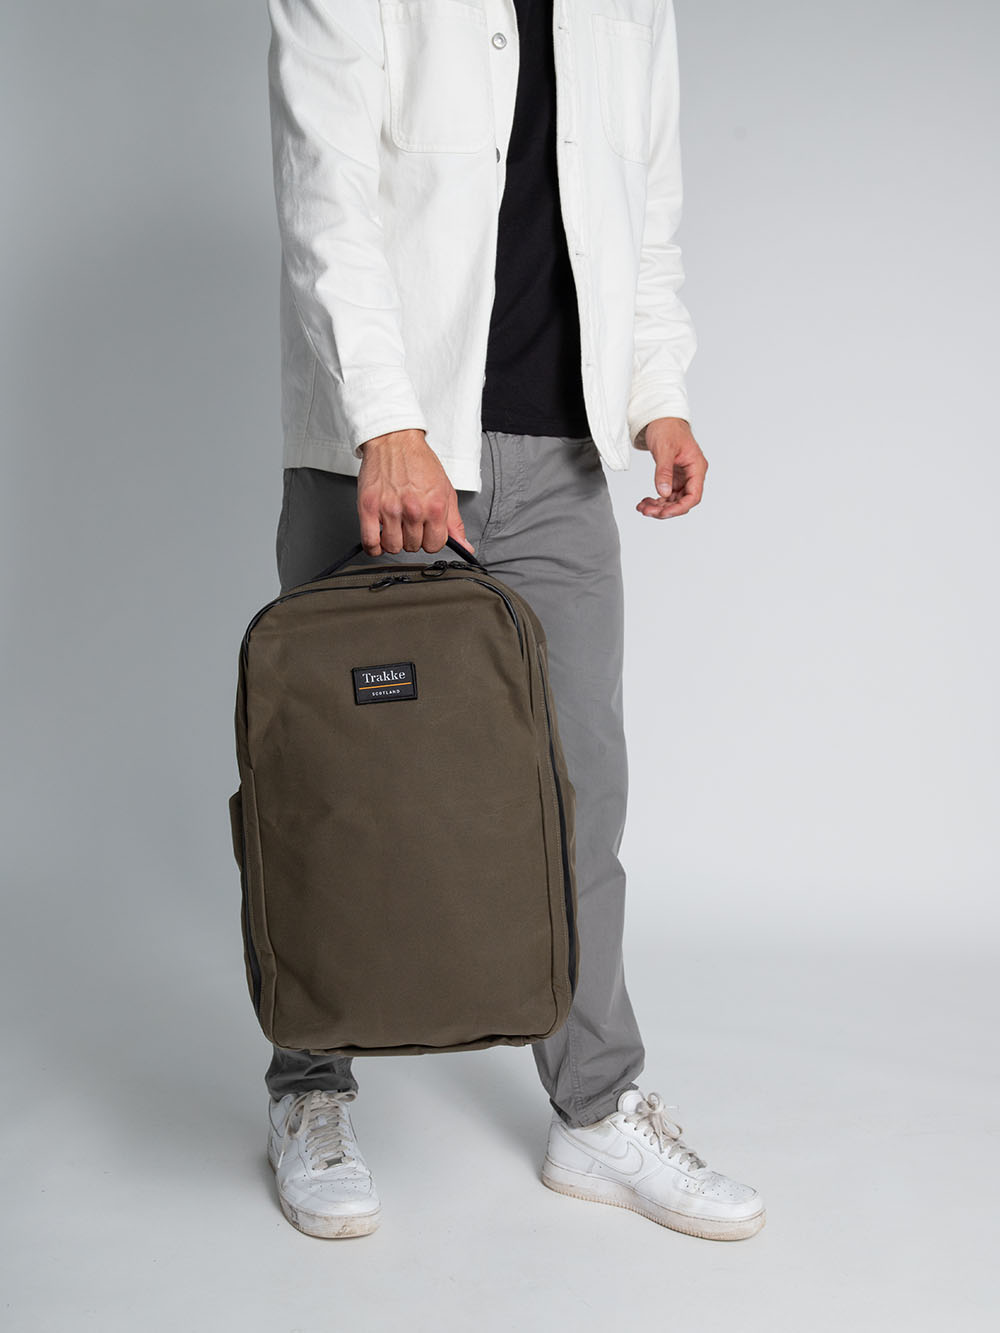 Best Work Bags: Trakke Bannoch Backpack Review - YouTube